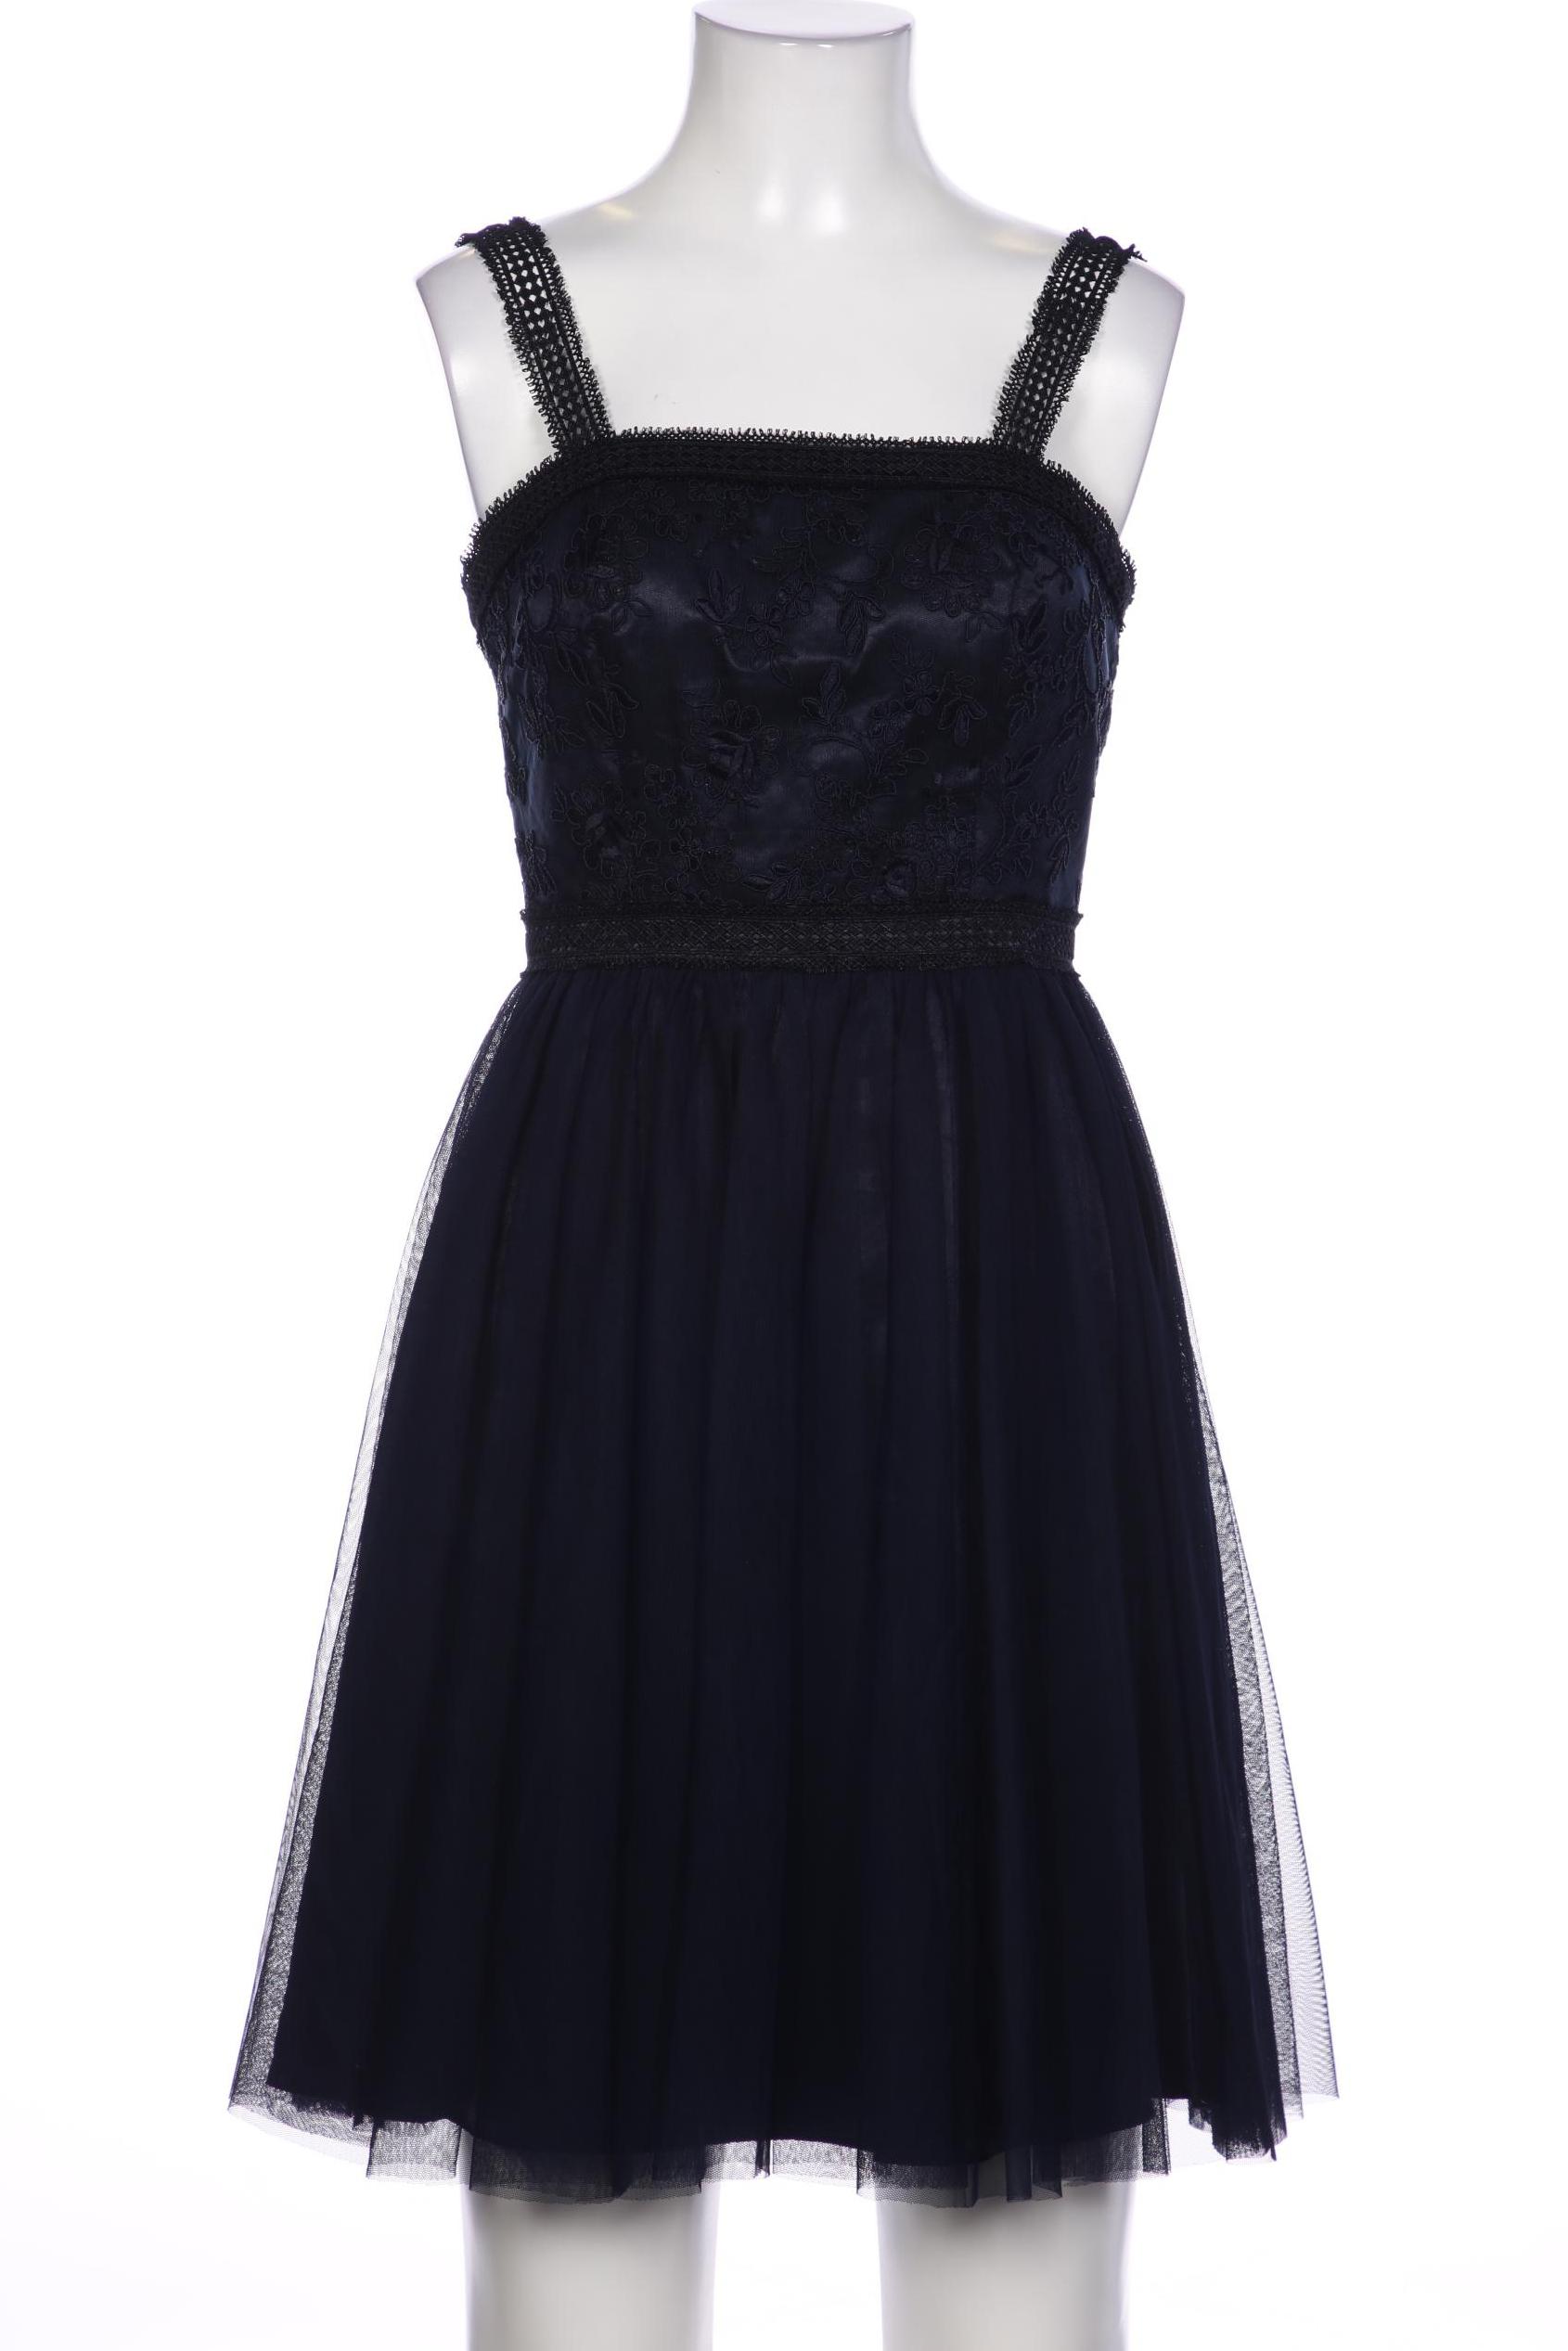 Laona Damen Kleid, marineblau, Gr. 36 von LAONA